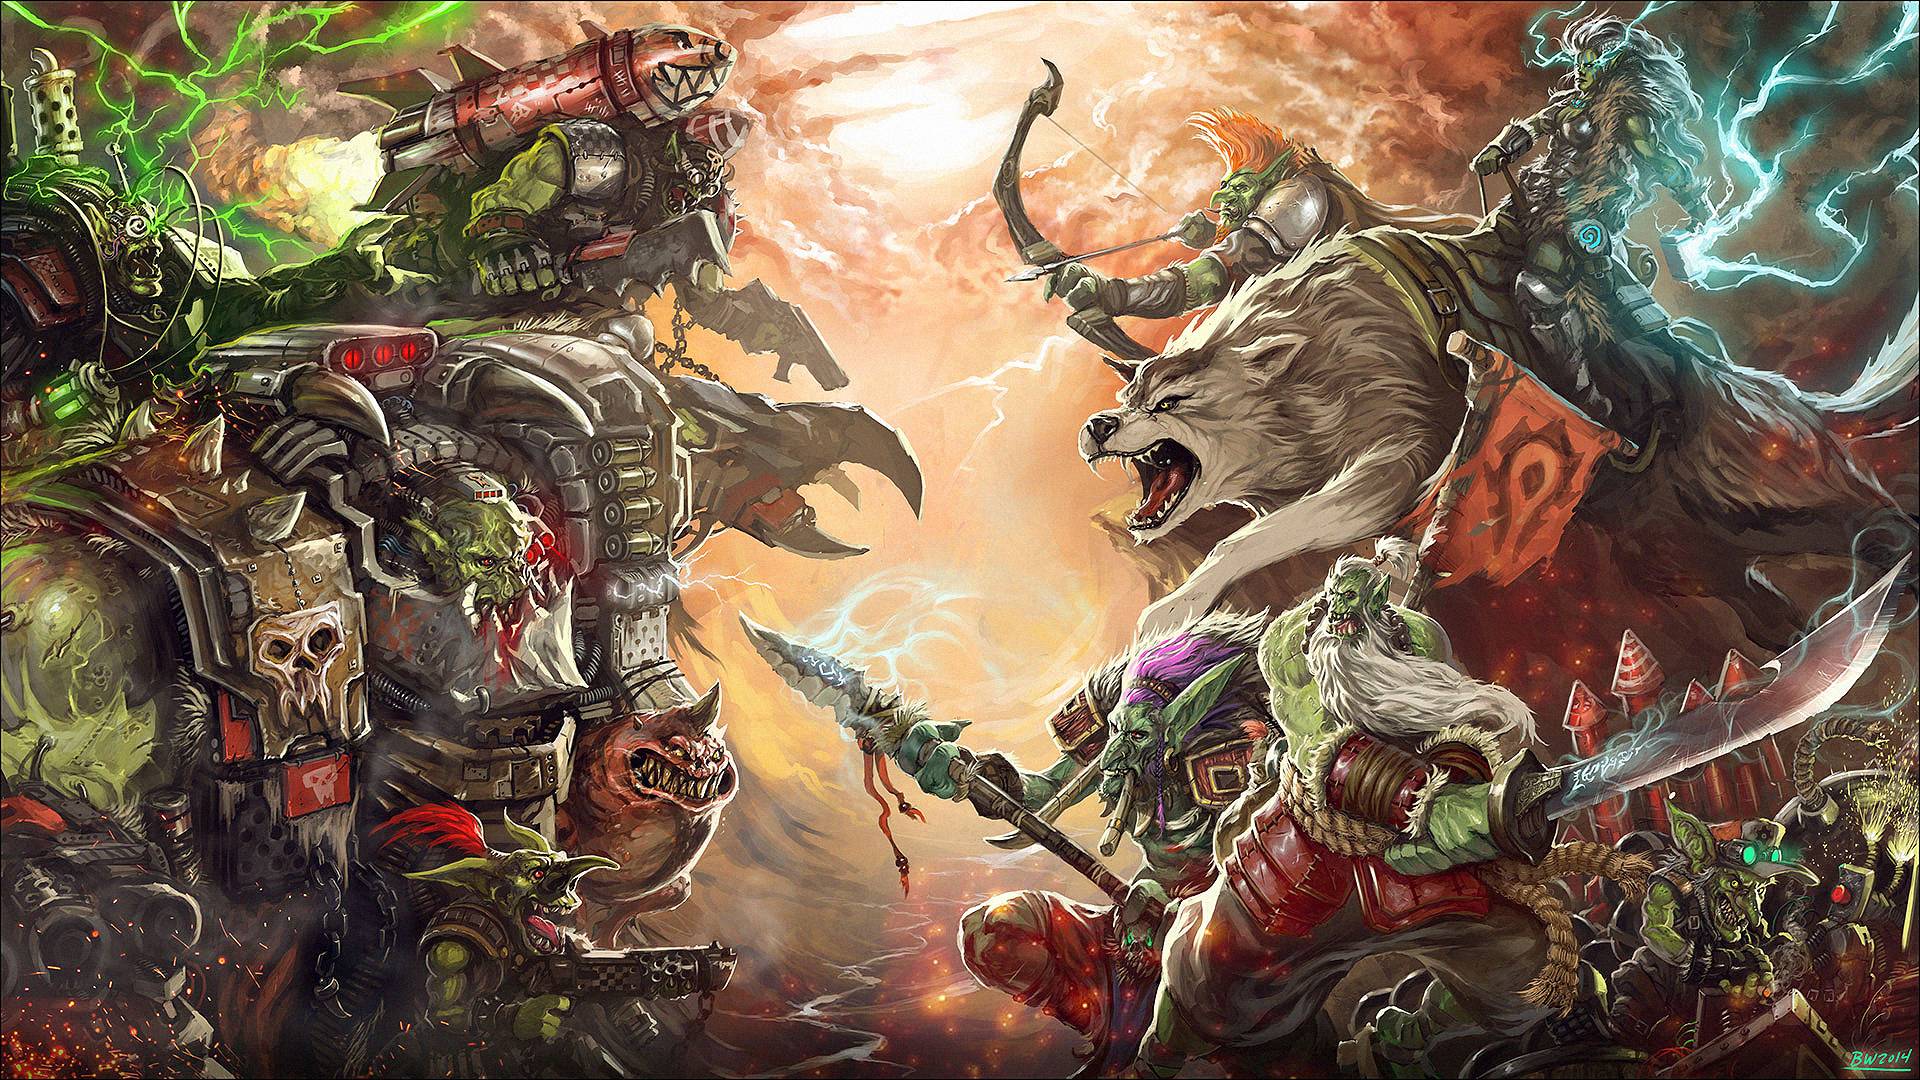 Orks vs. Orcs wins?